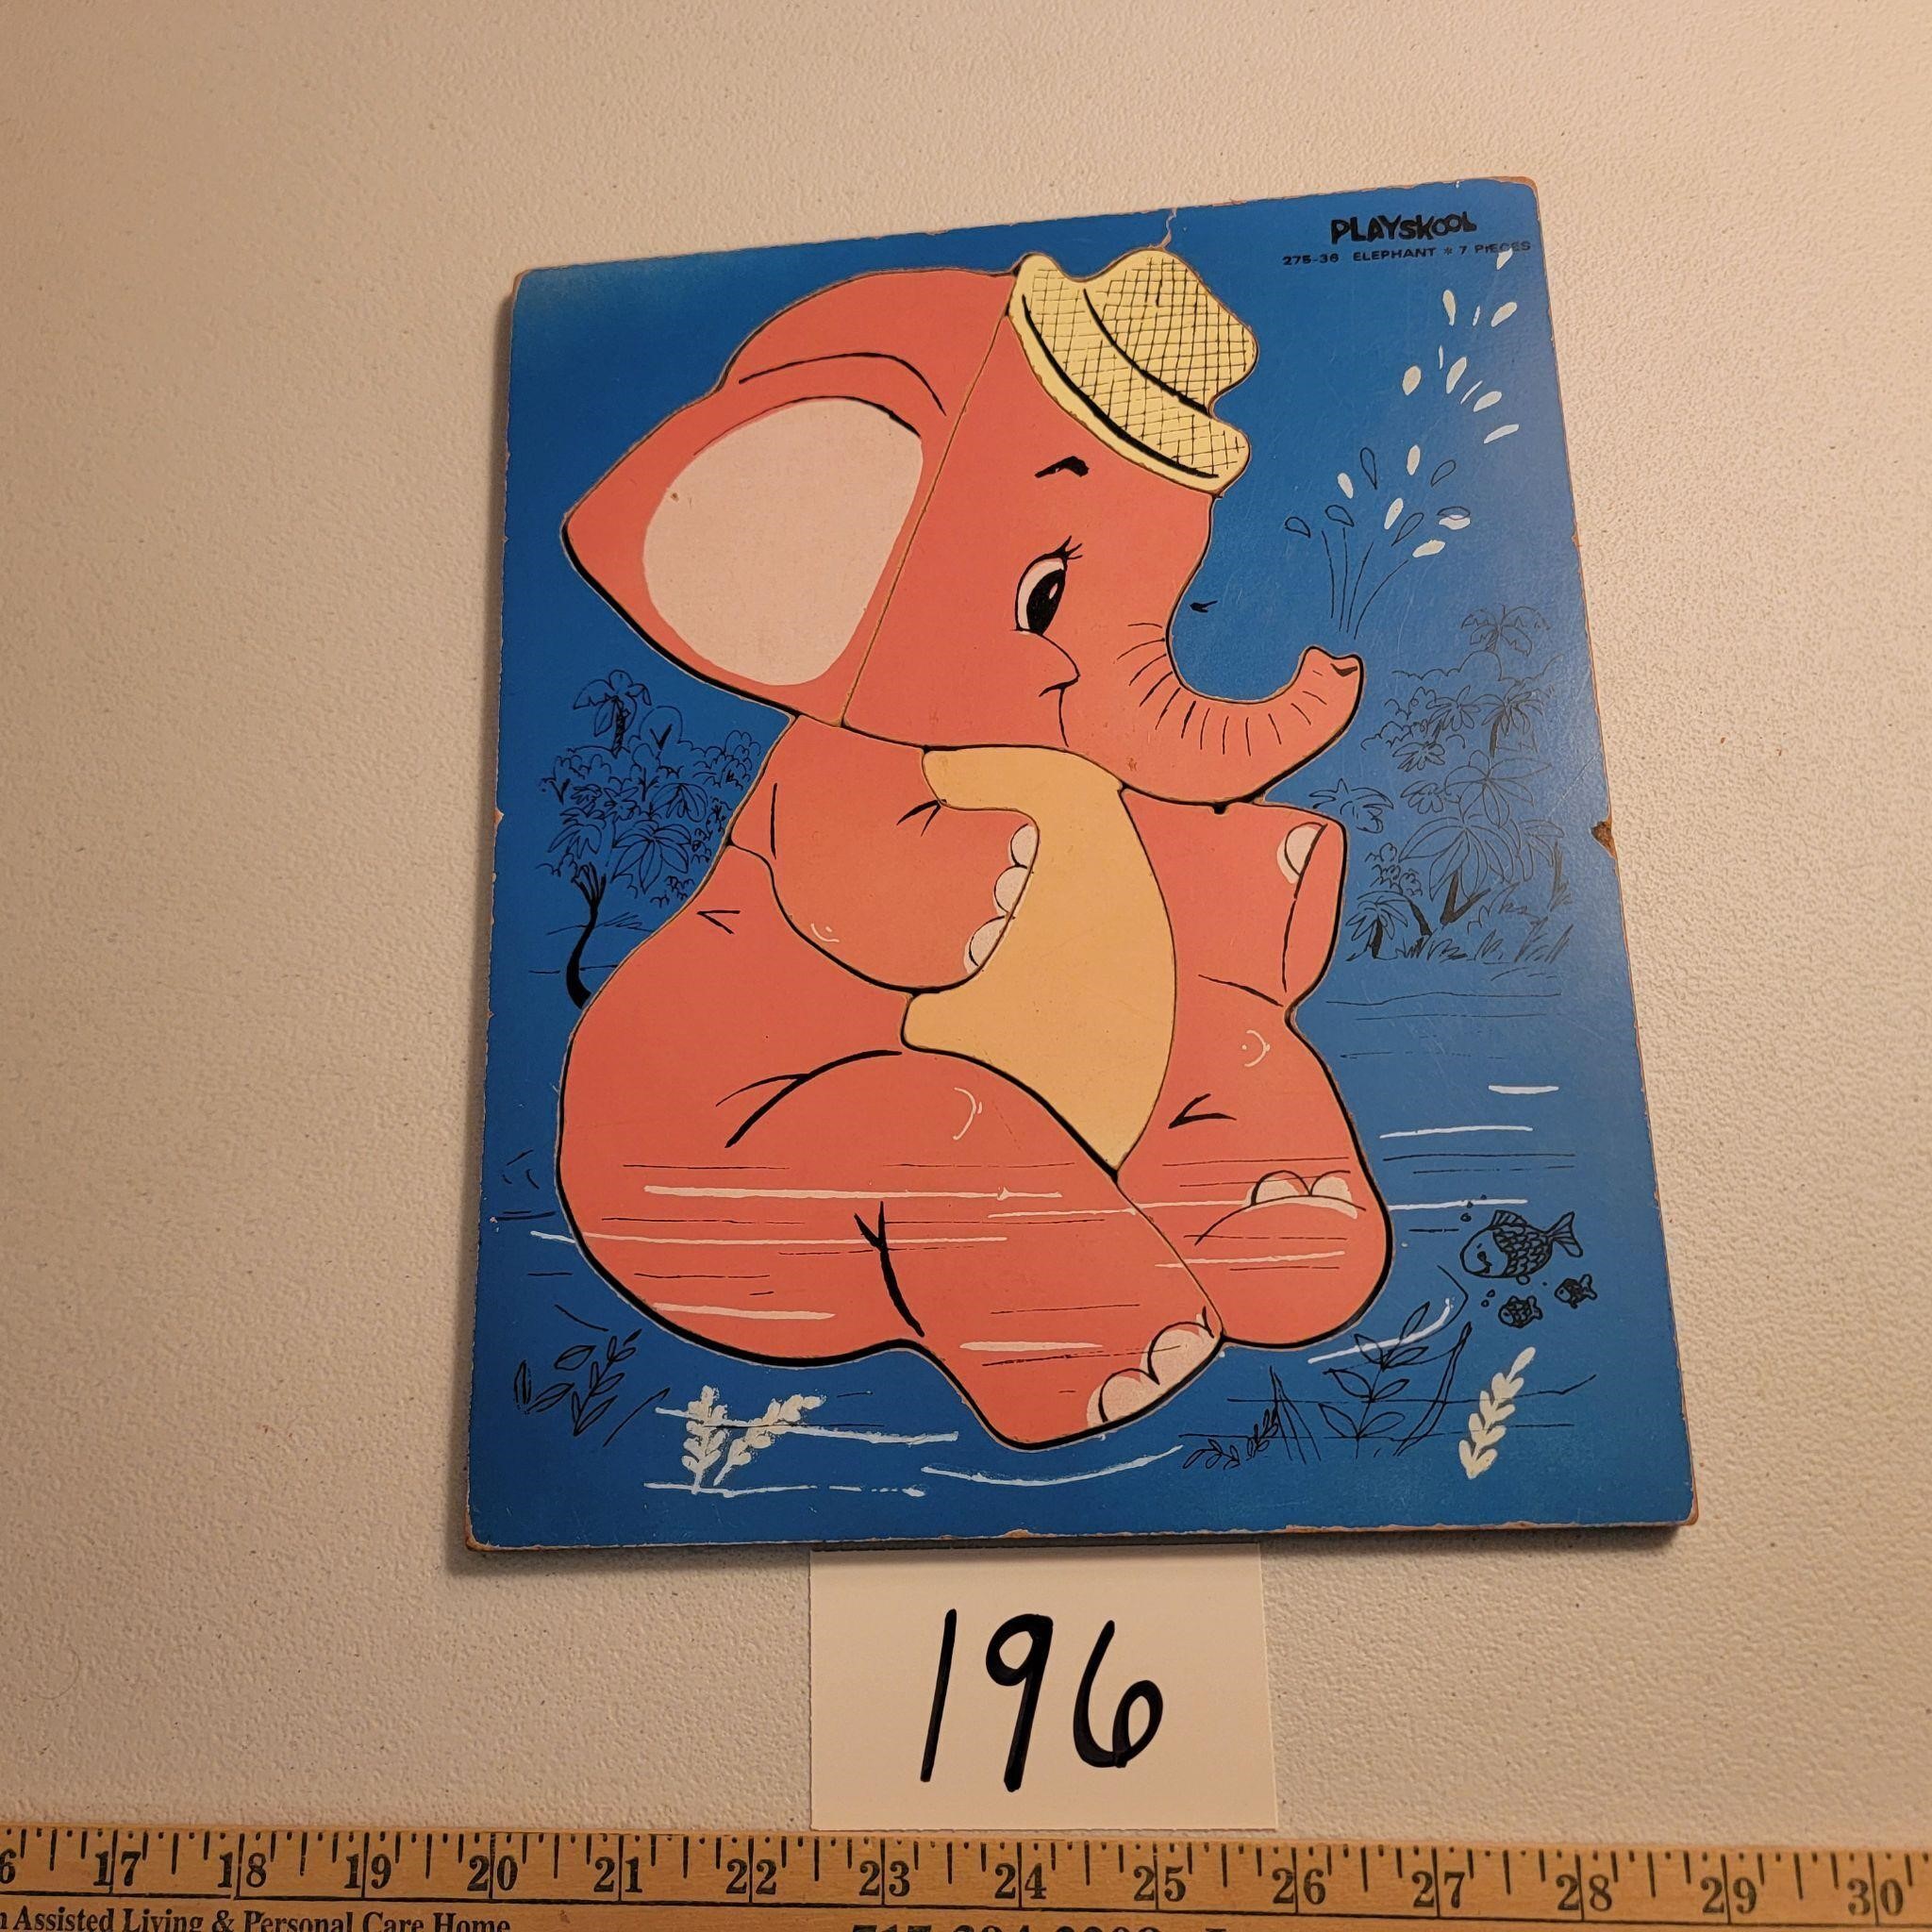 Playskool Elephant 275-36 Puzzle